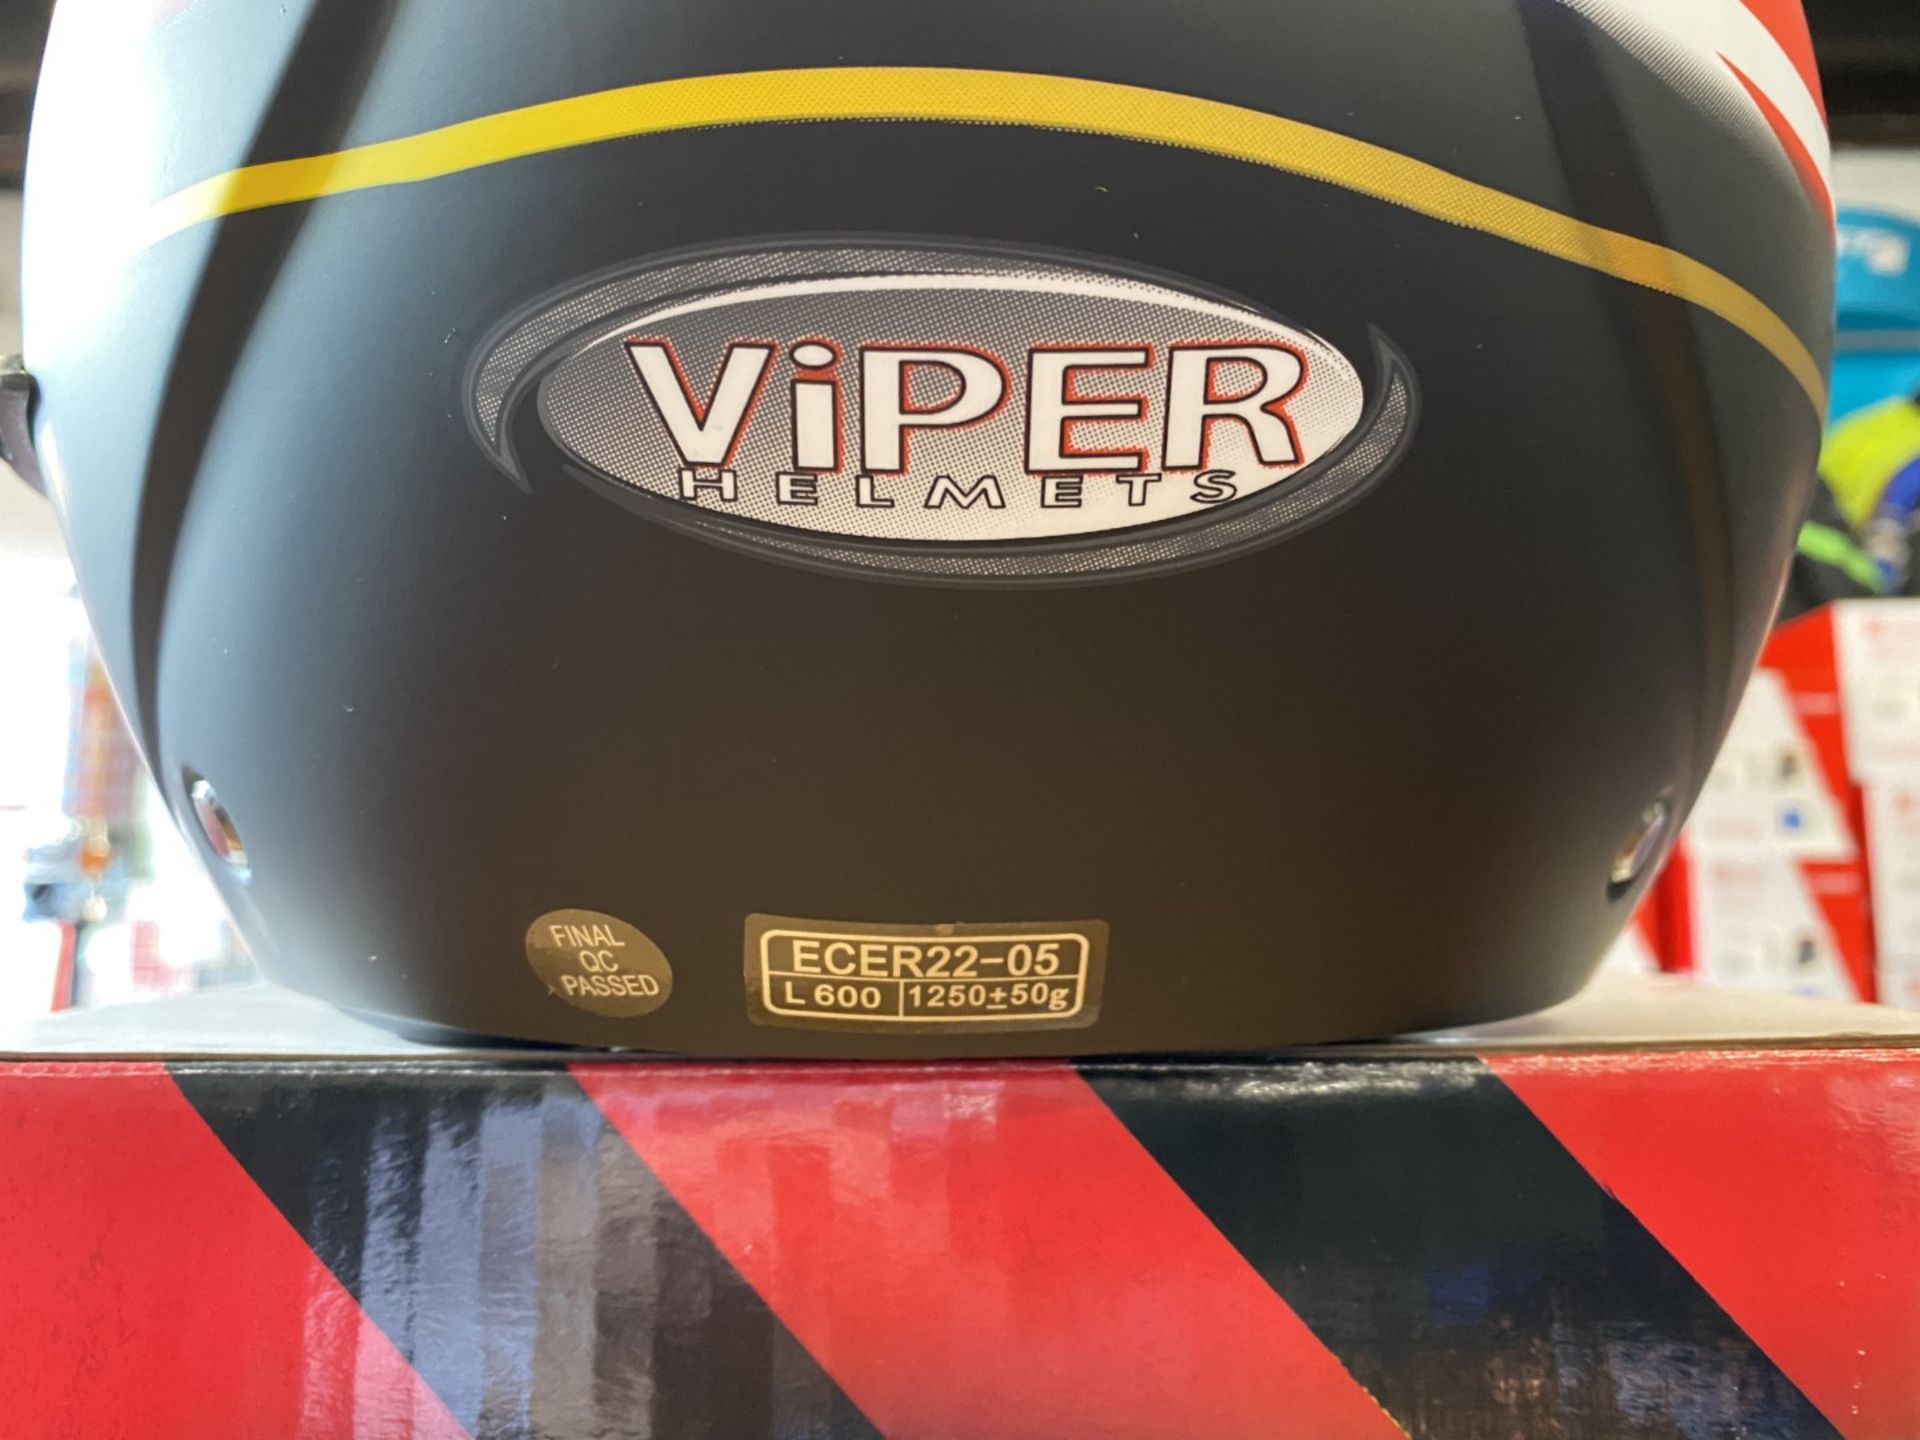 Viper RSV18 Union Jack Matt Large - Viper Helmets - Motorcycle / Motorbike Helmet - RRP £55.00 - Image 4 of 5